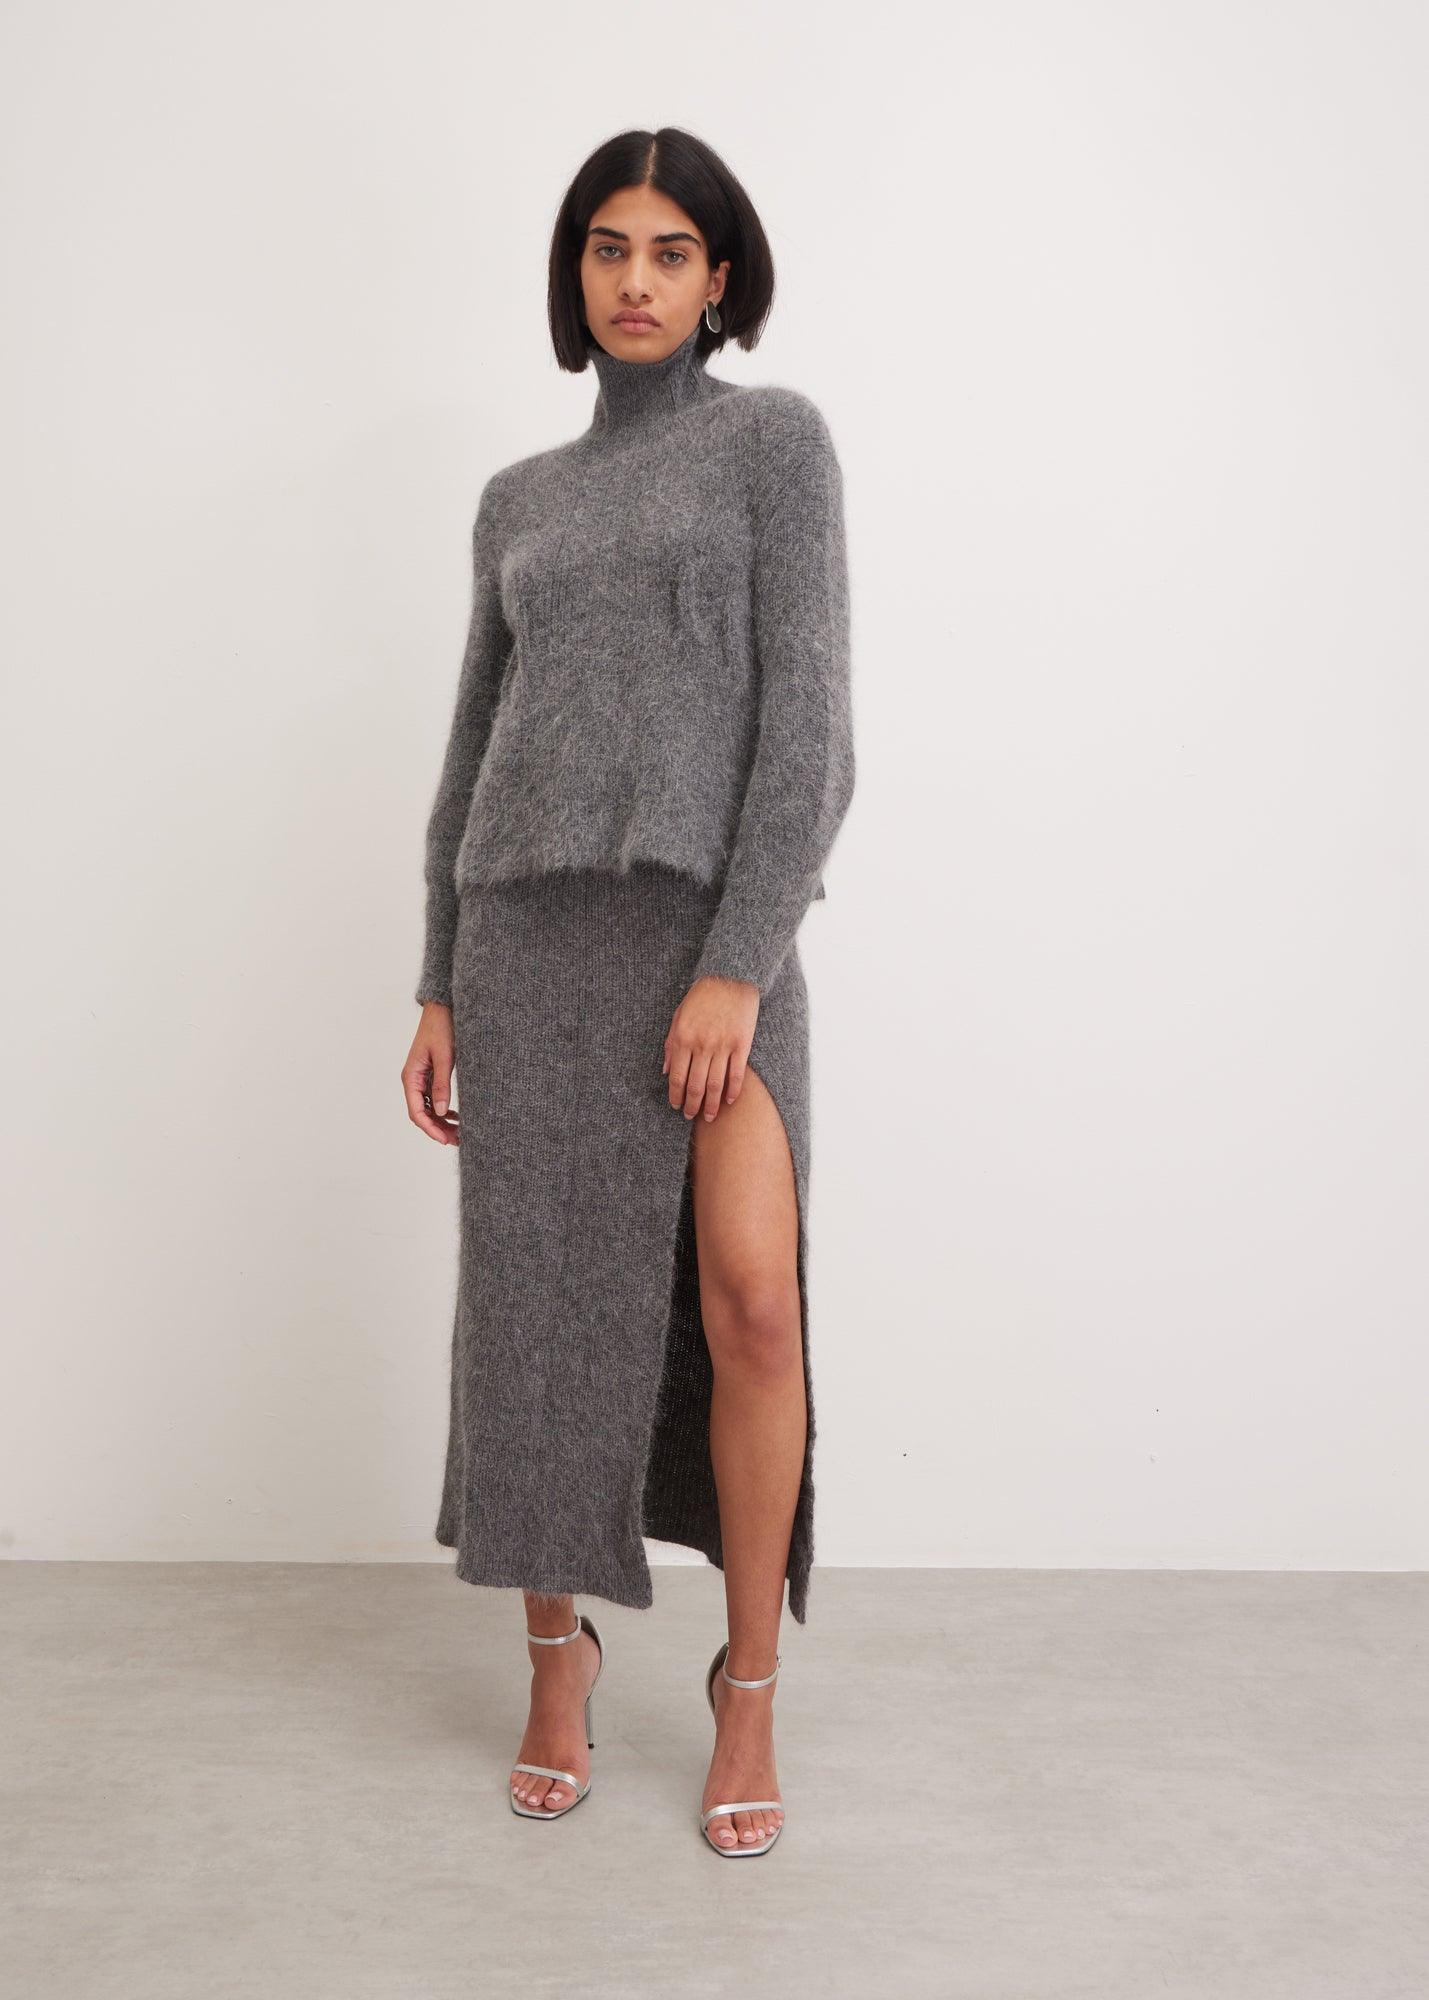 KNITEL grey angora sweater - SONI London